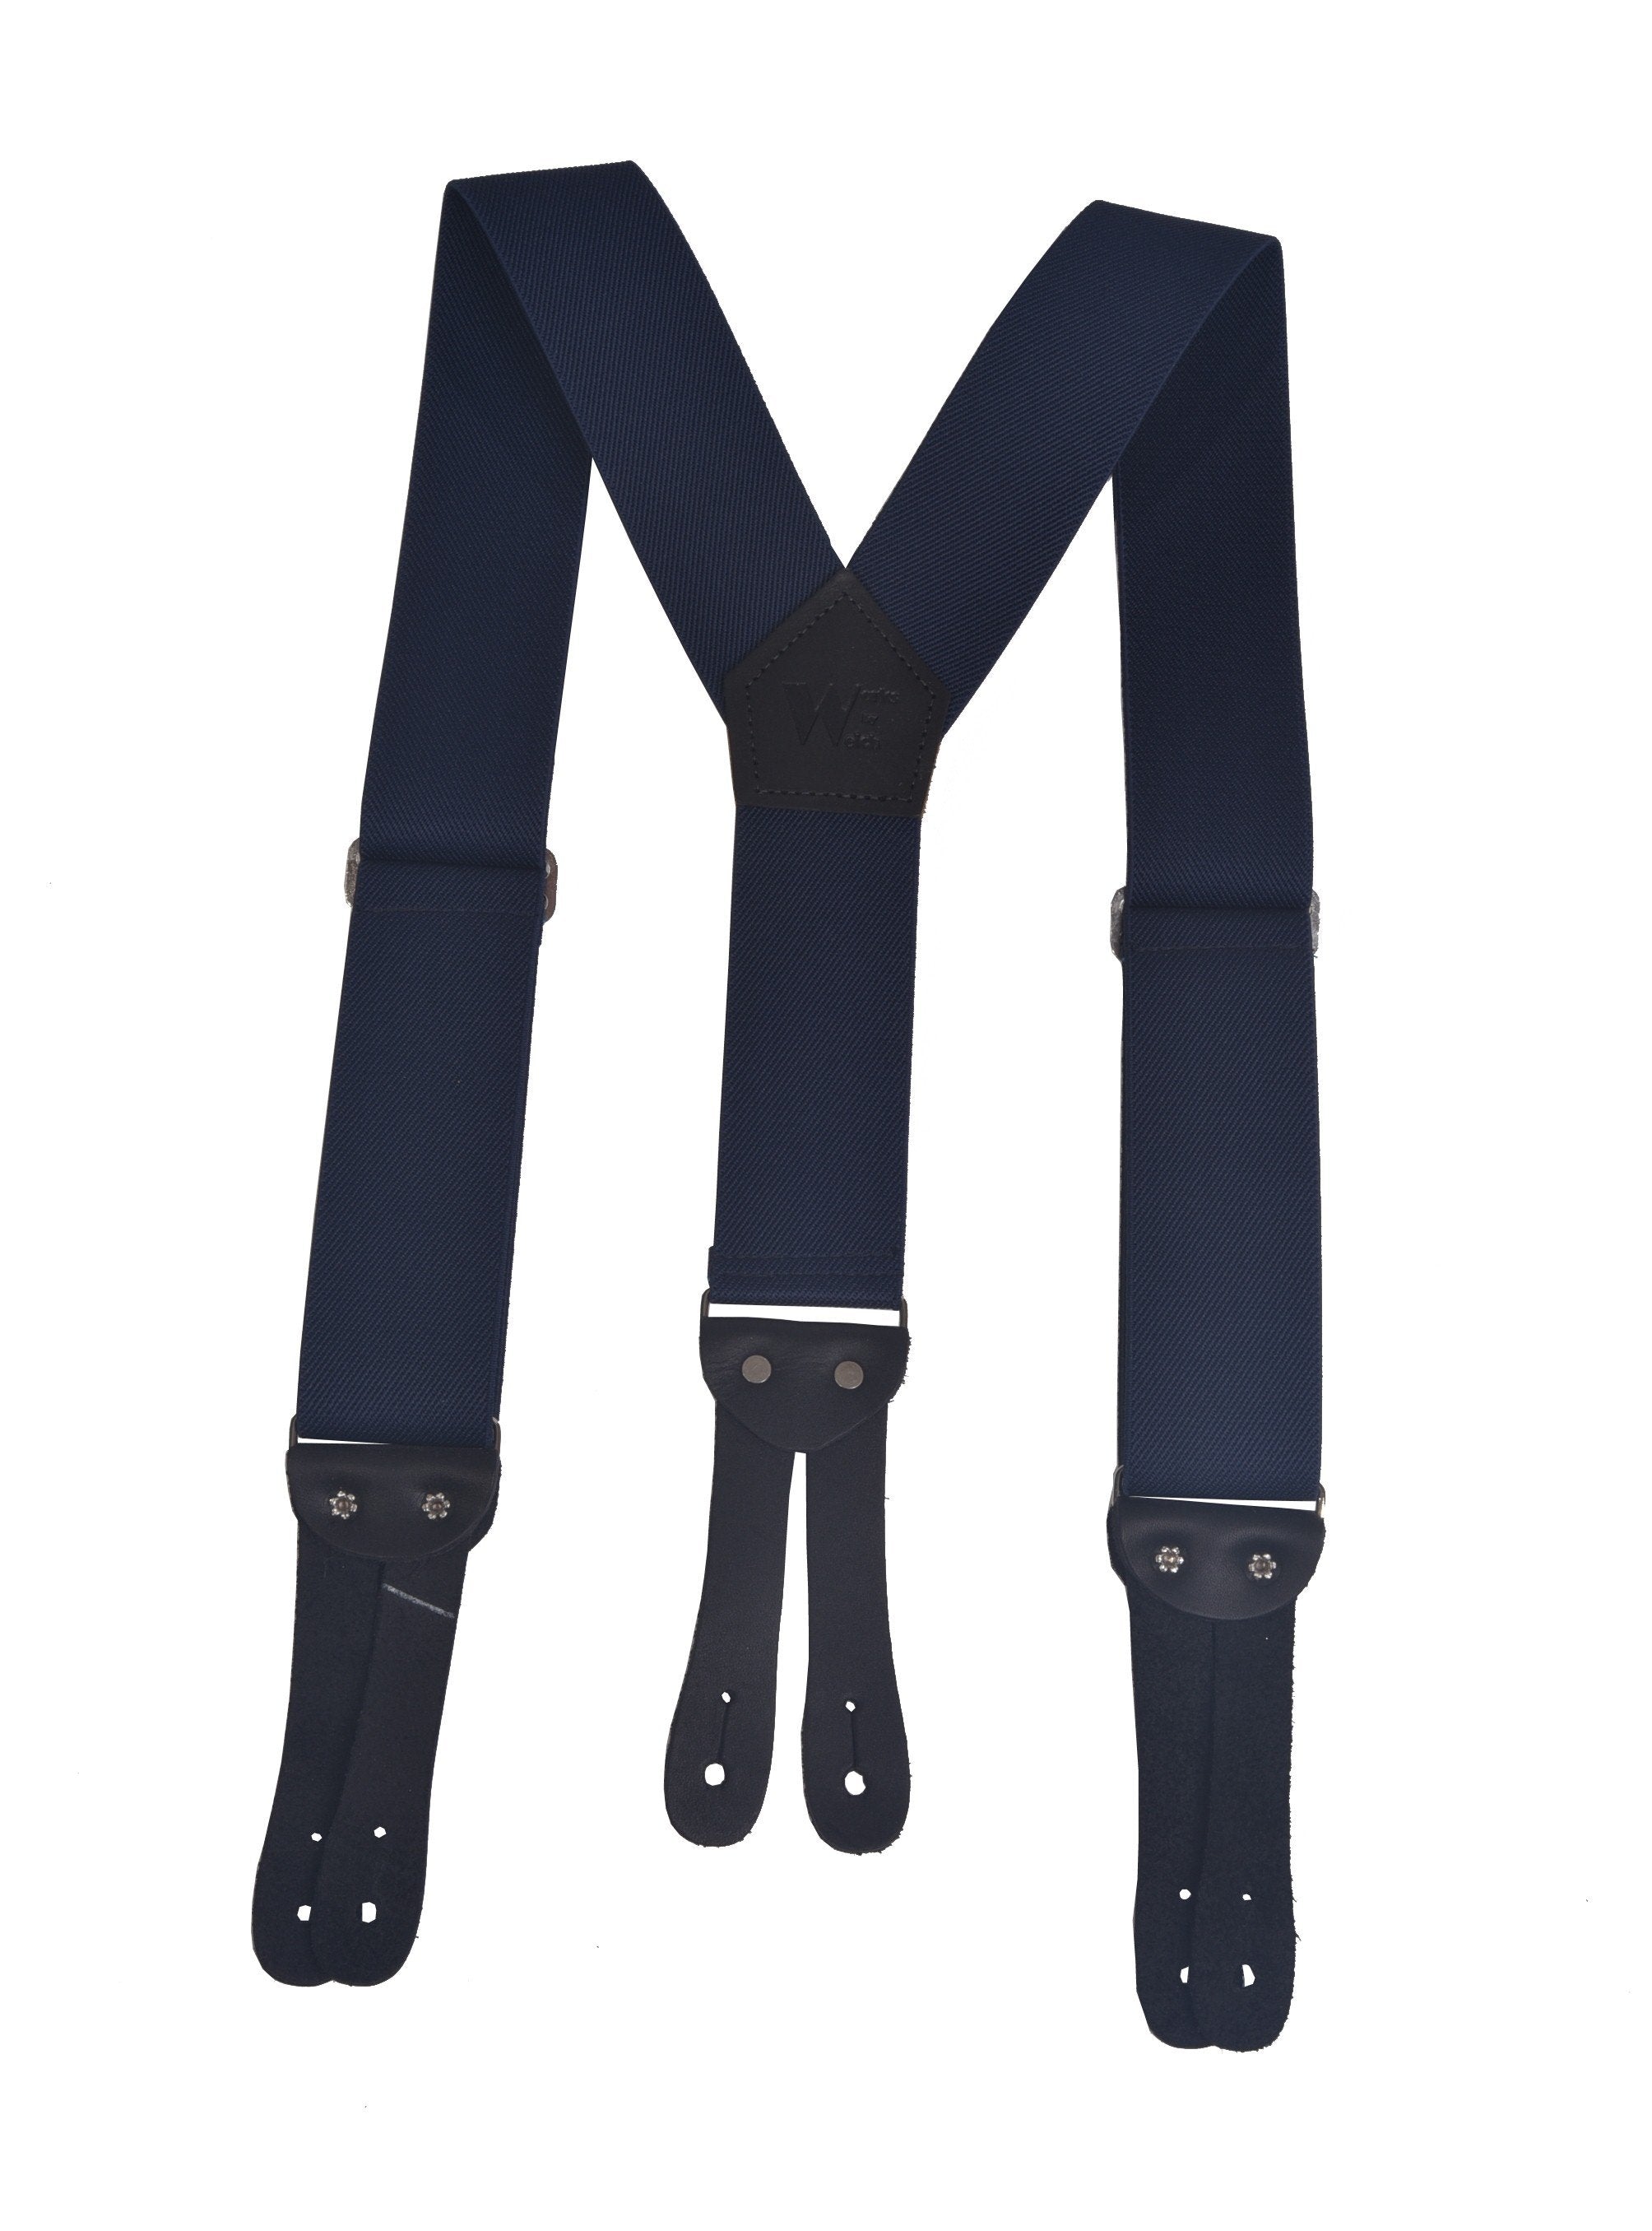 Black Brass Clip Suspenders, 1.5-inch Wide